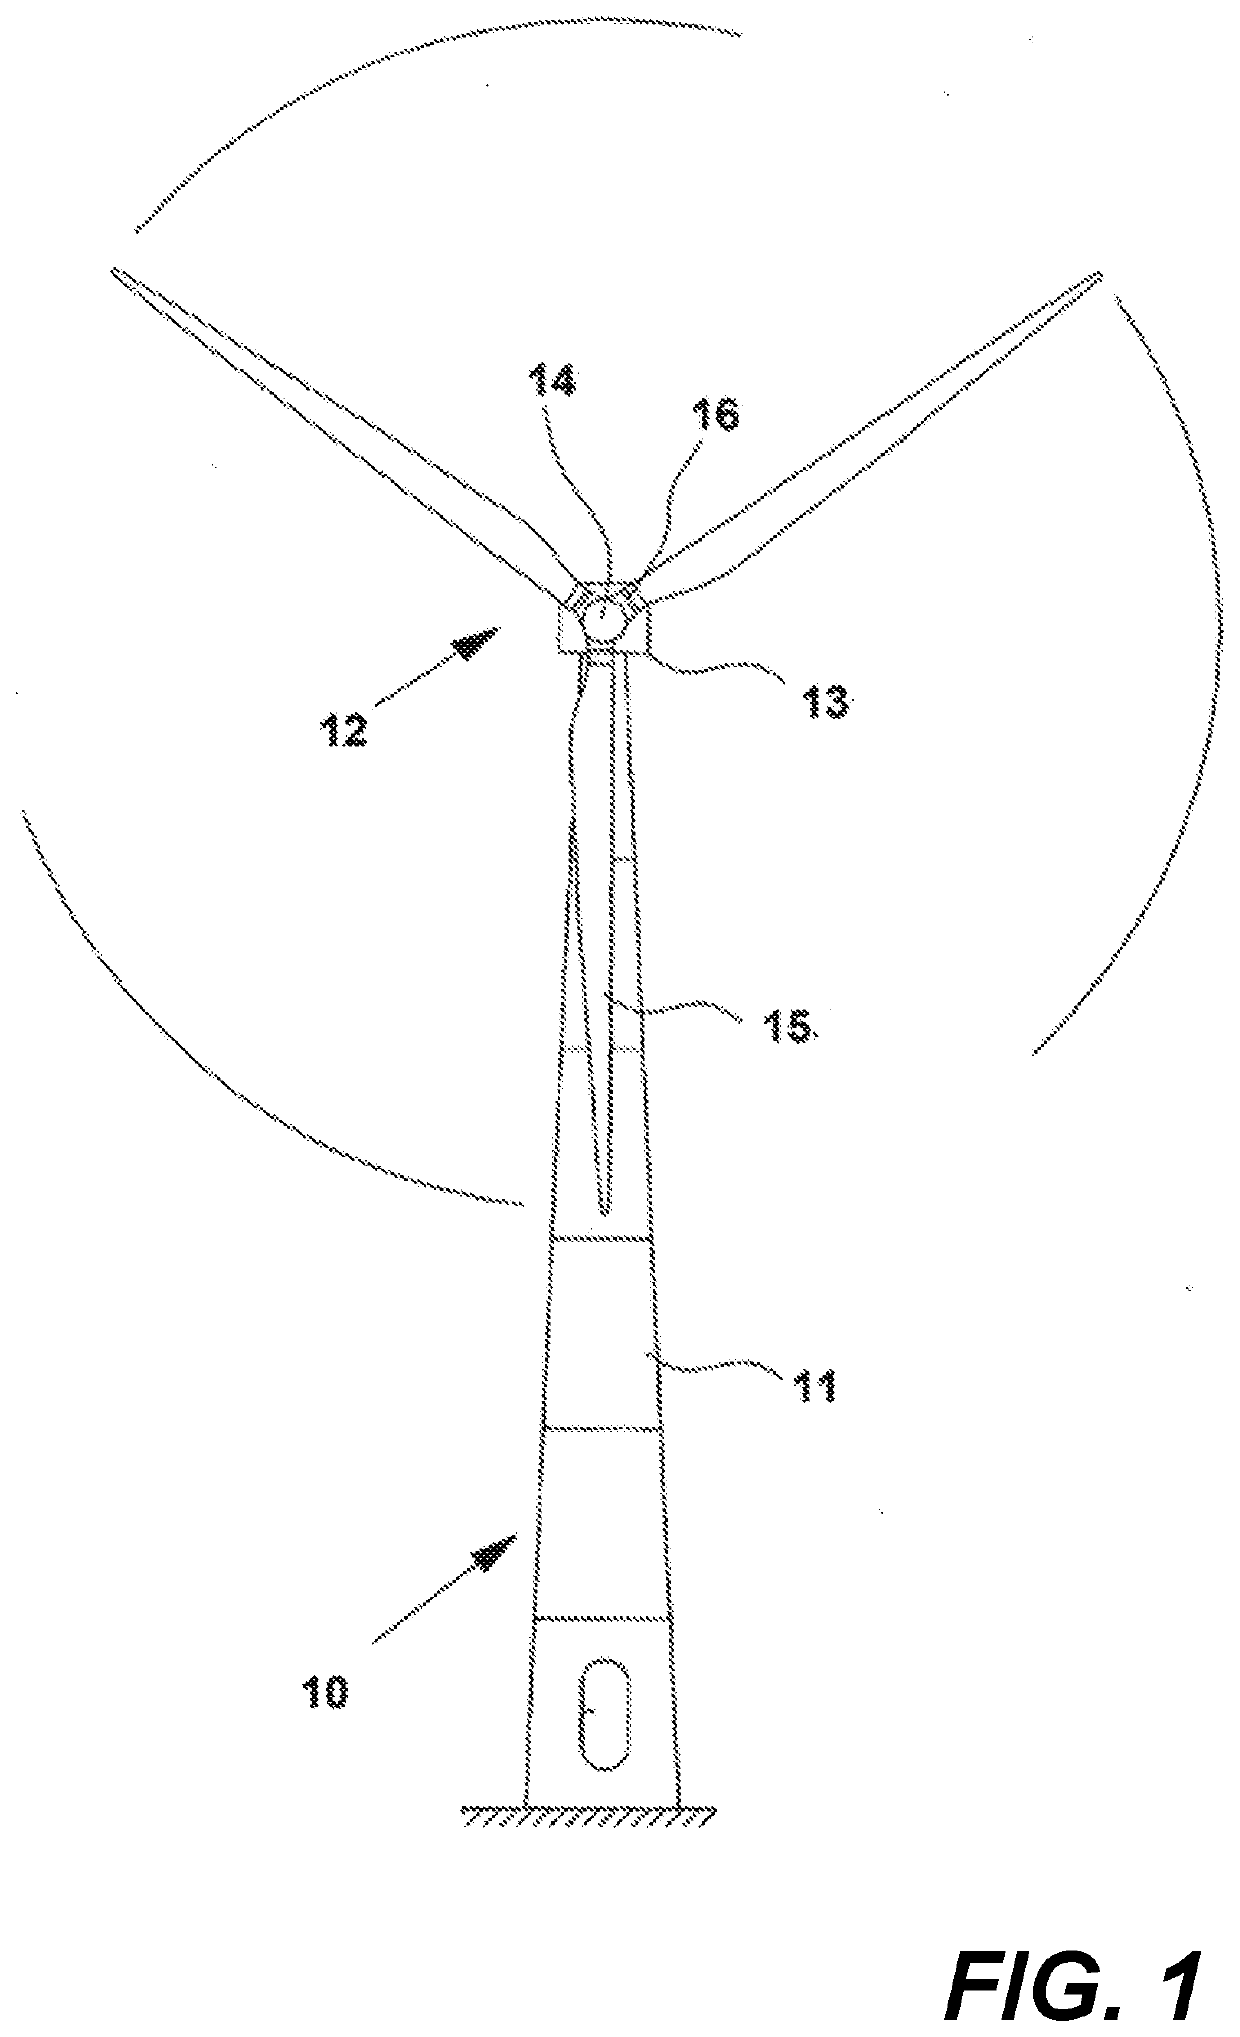 Controlling wind turbine noise